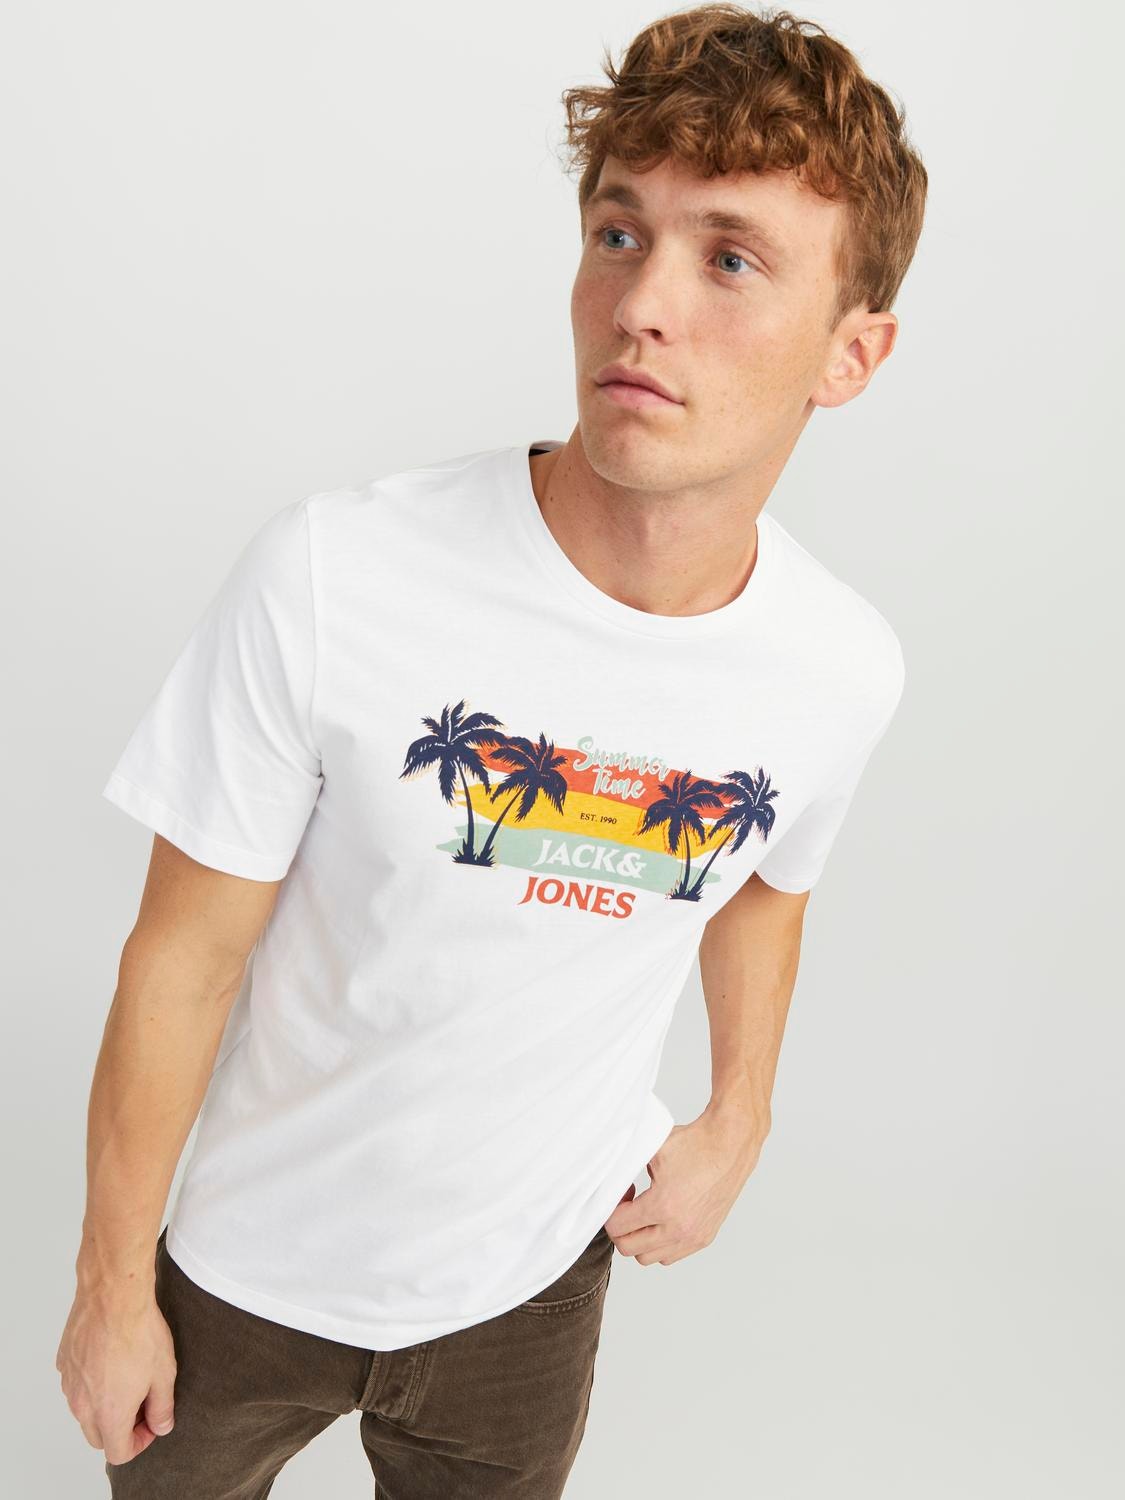 Jack & Jones Printet Crew neck T-shirt -White - 12249266